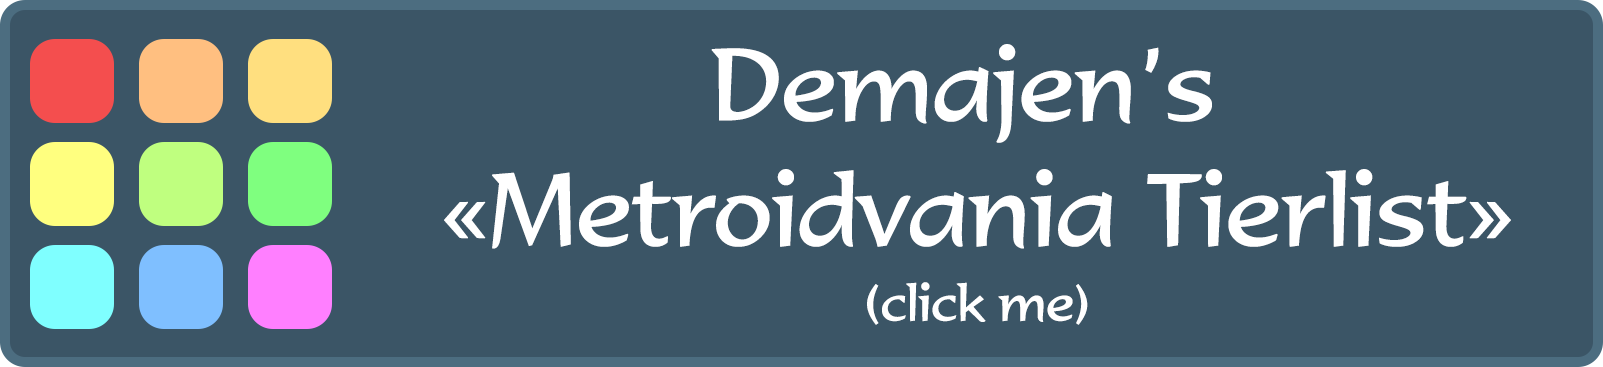 Demajen's Metroidvania Tierlist - Opens Separate Page